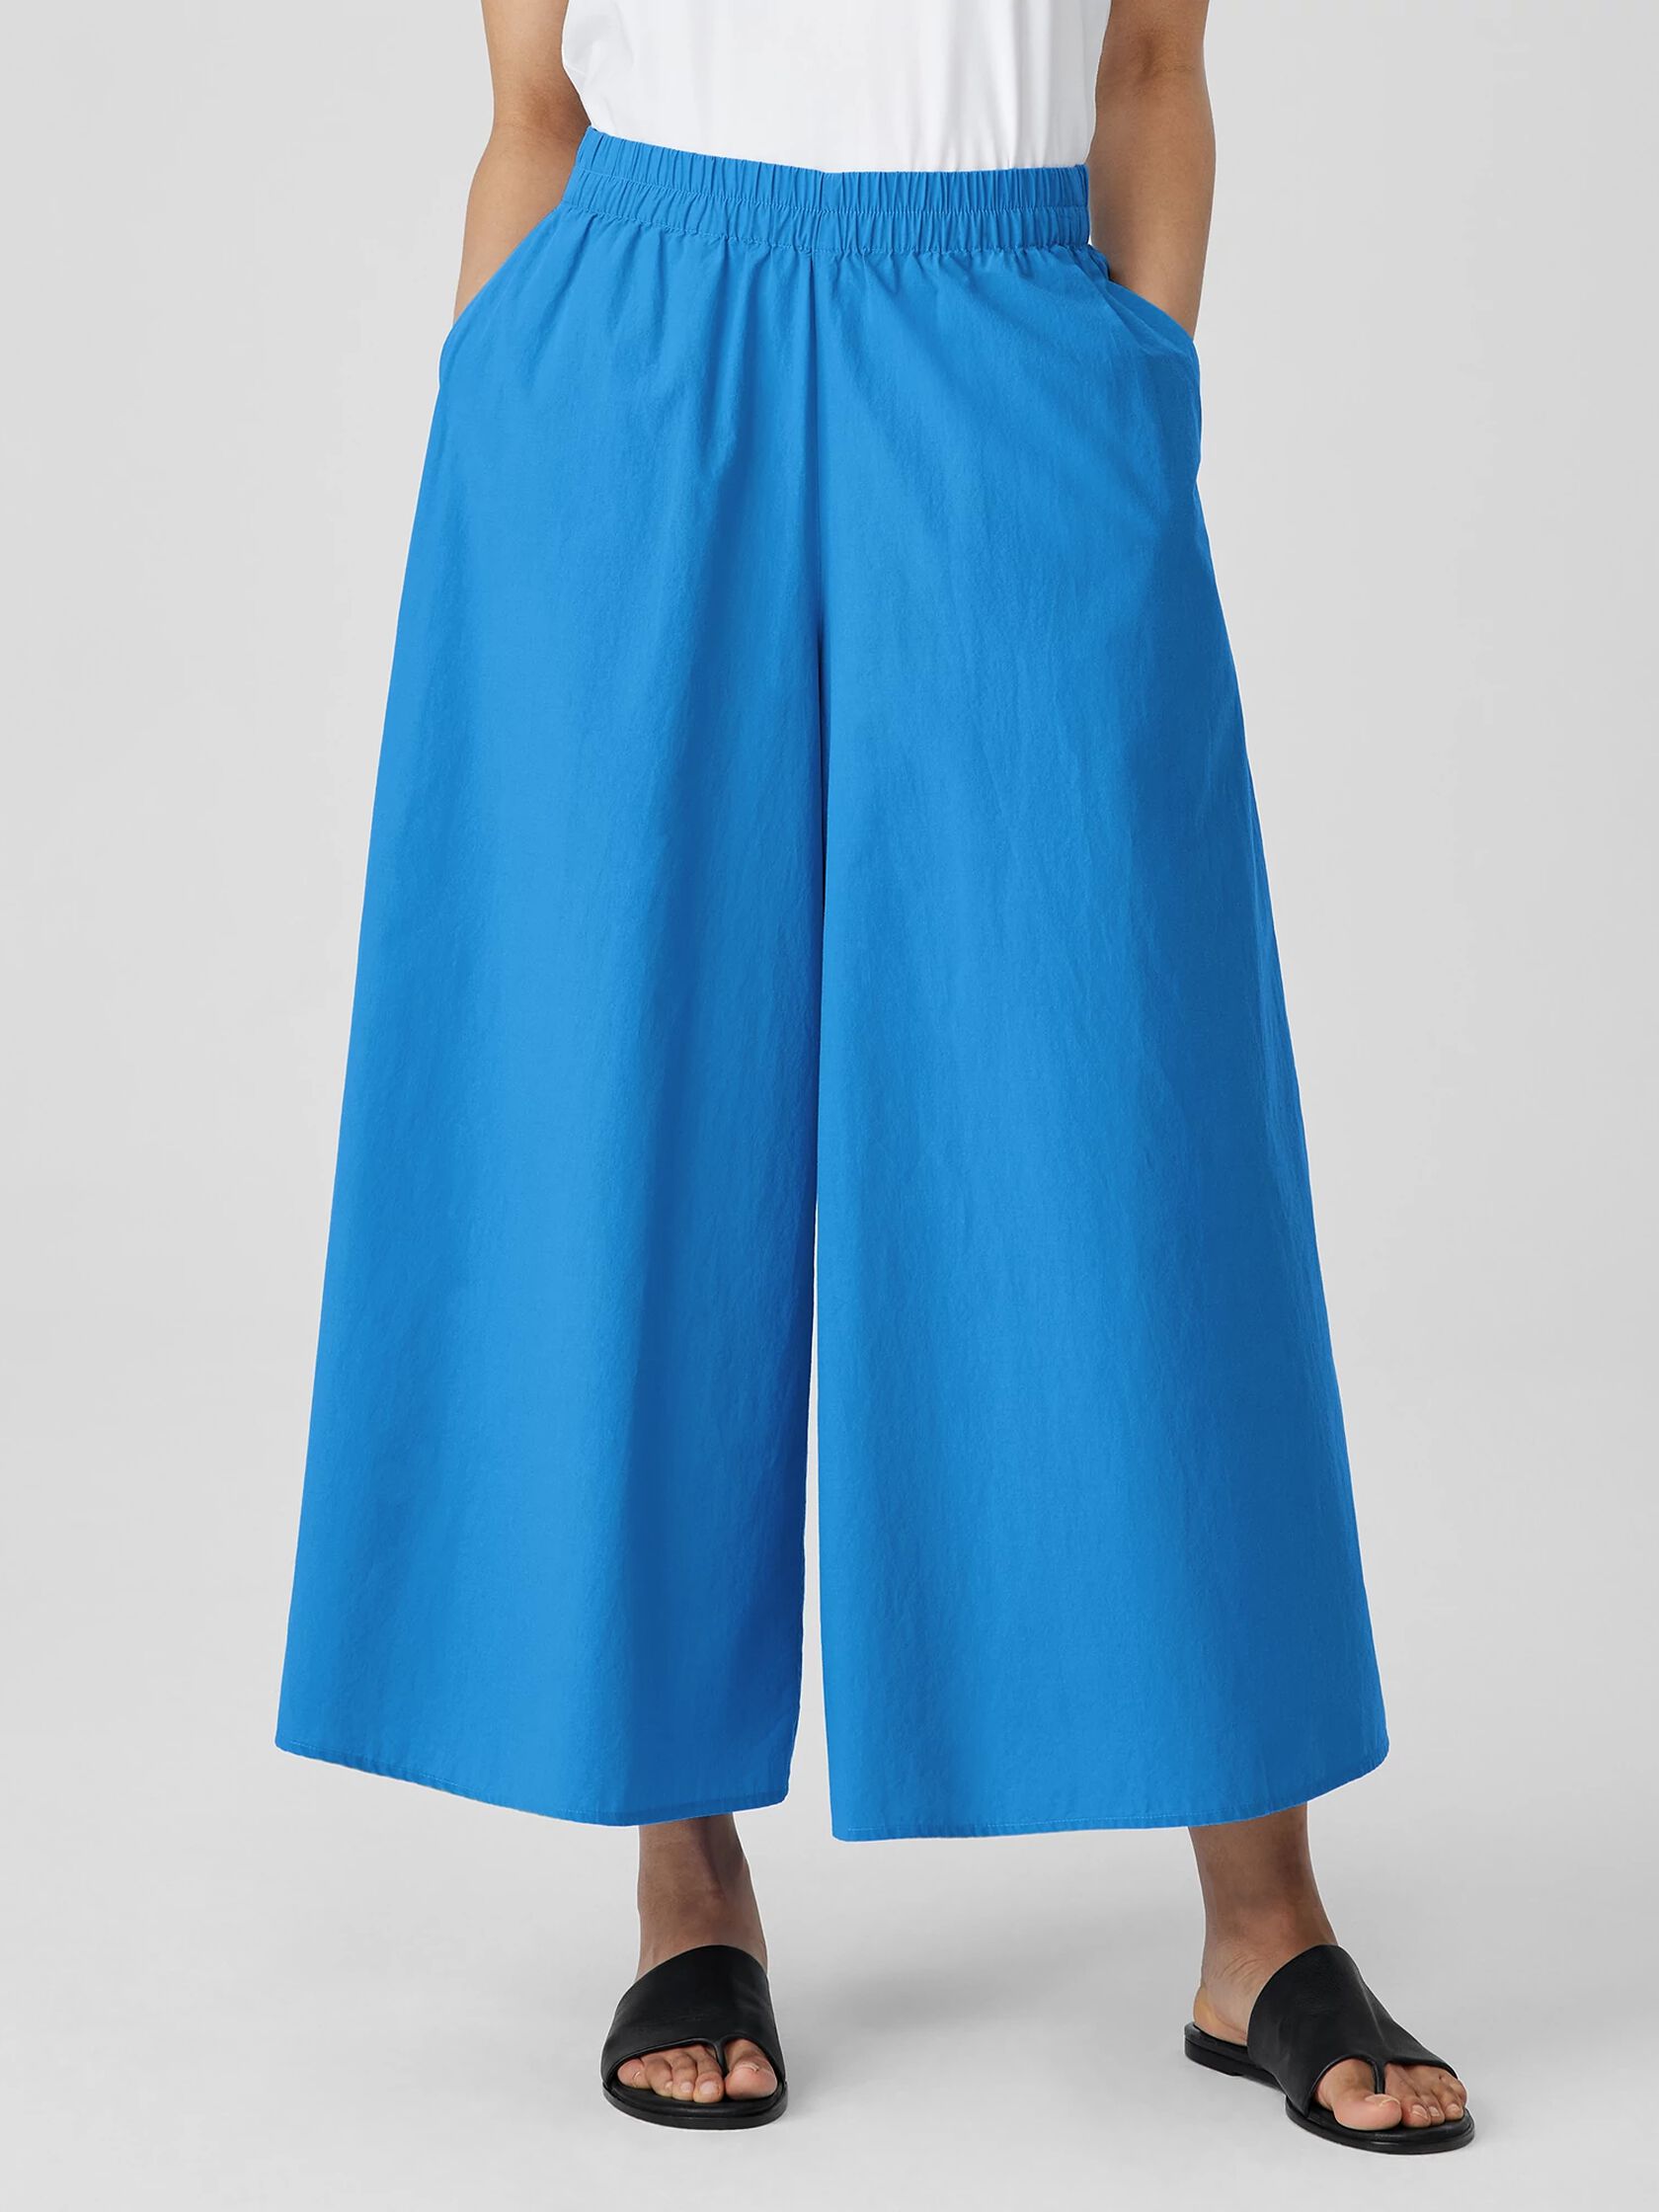 Washed Organic Cotton Poplin Skirt Pant